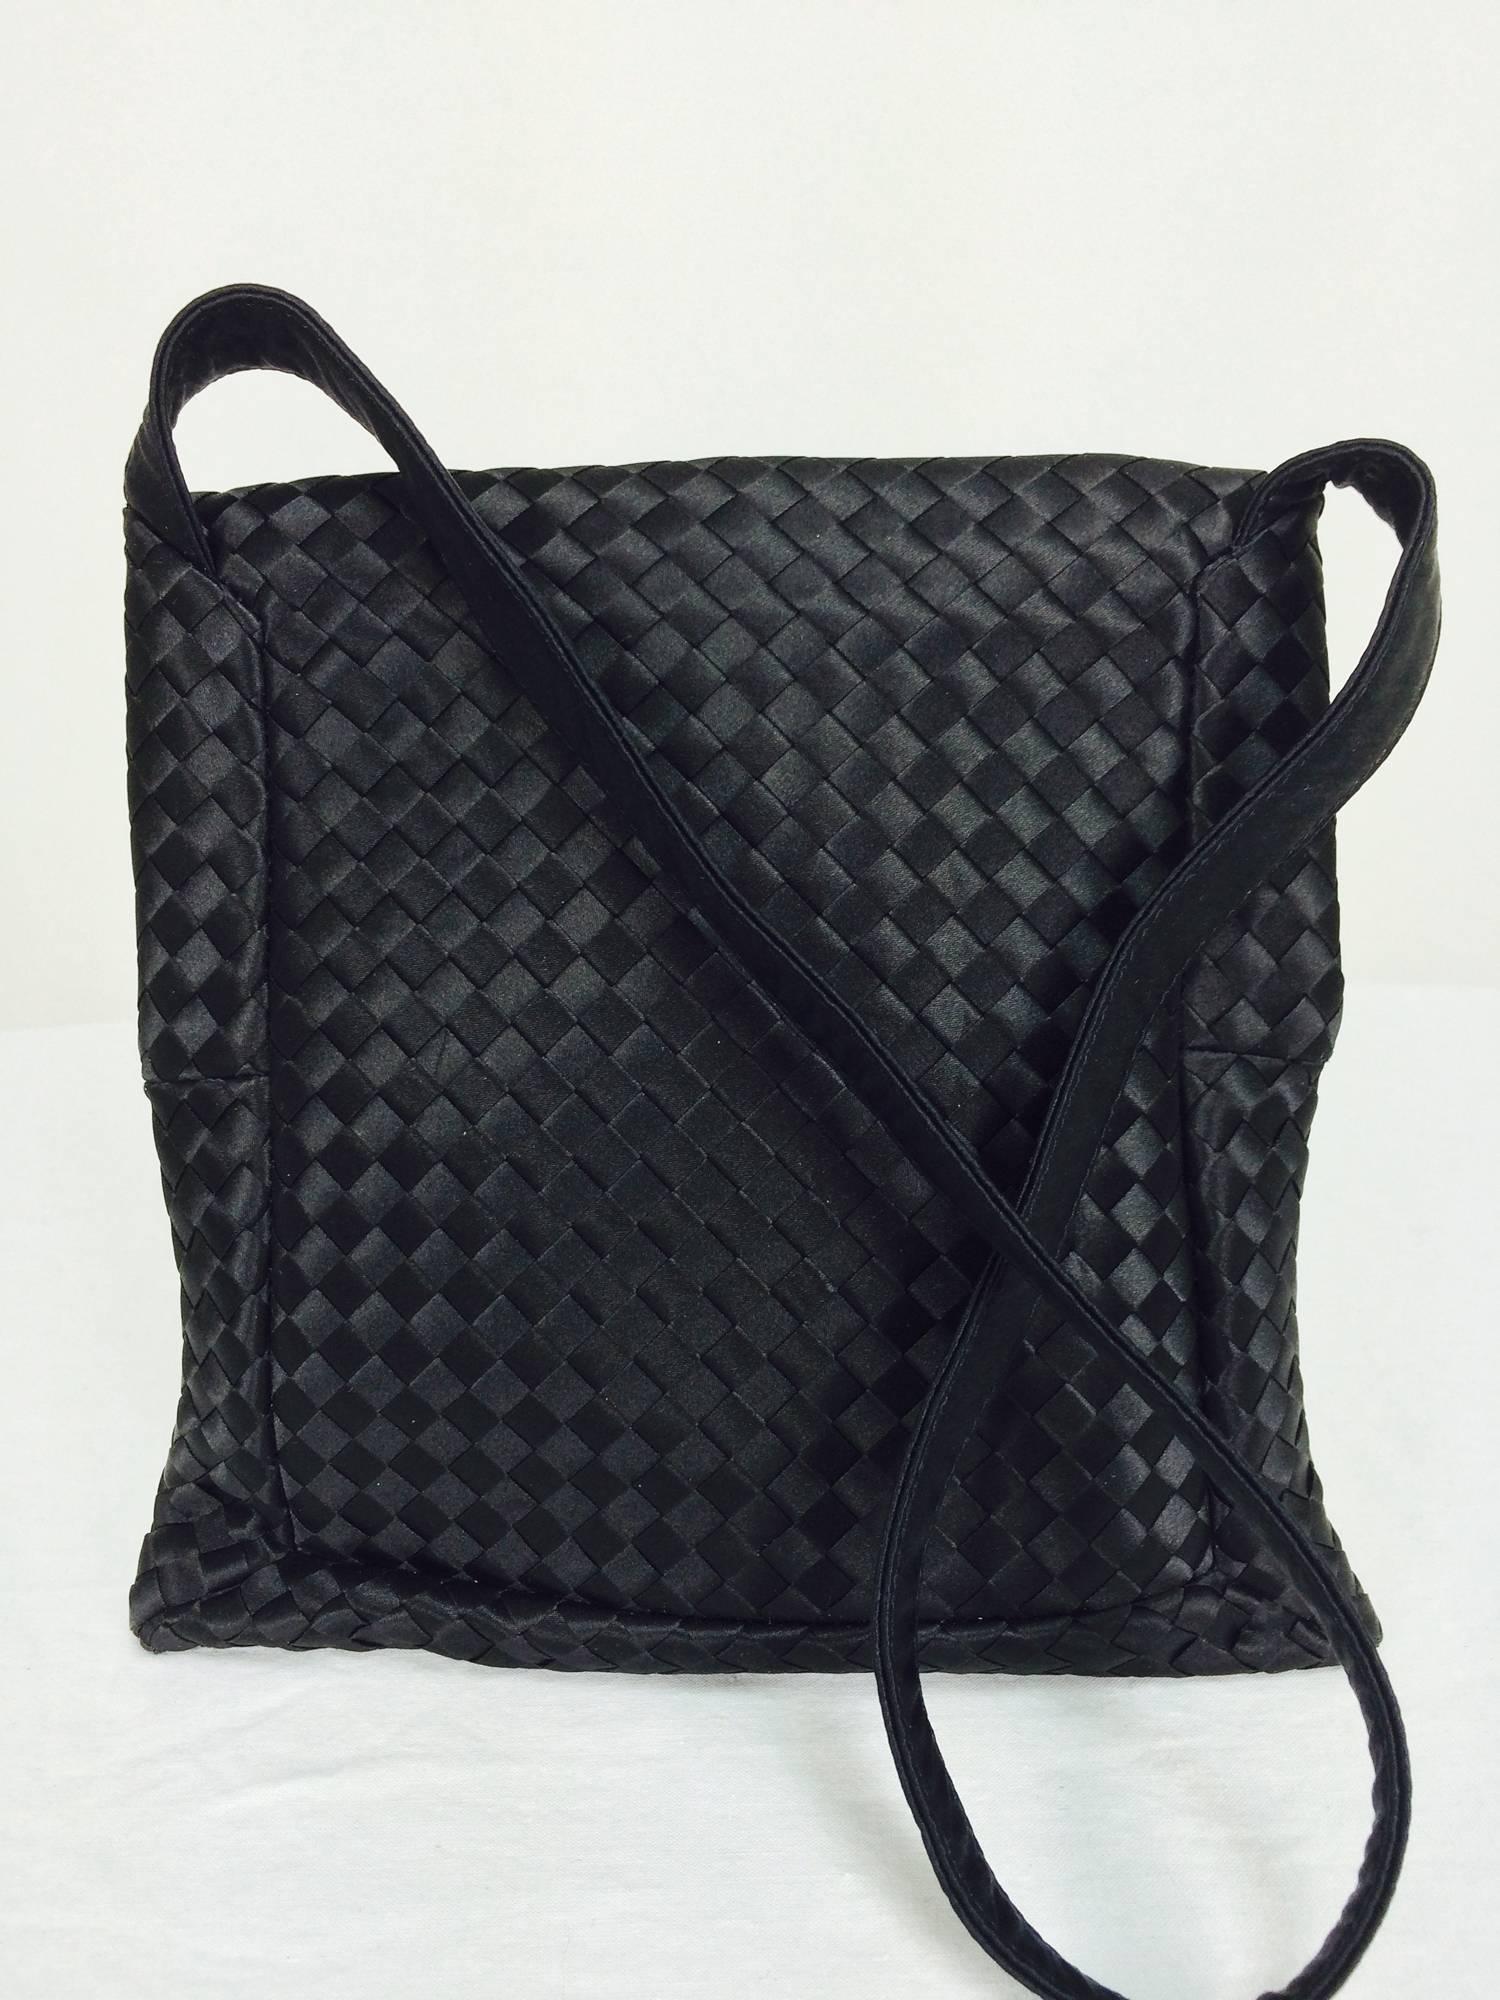 Bottega Veneta black silk satin Intrecciato shoulder bag handbag  2